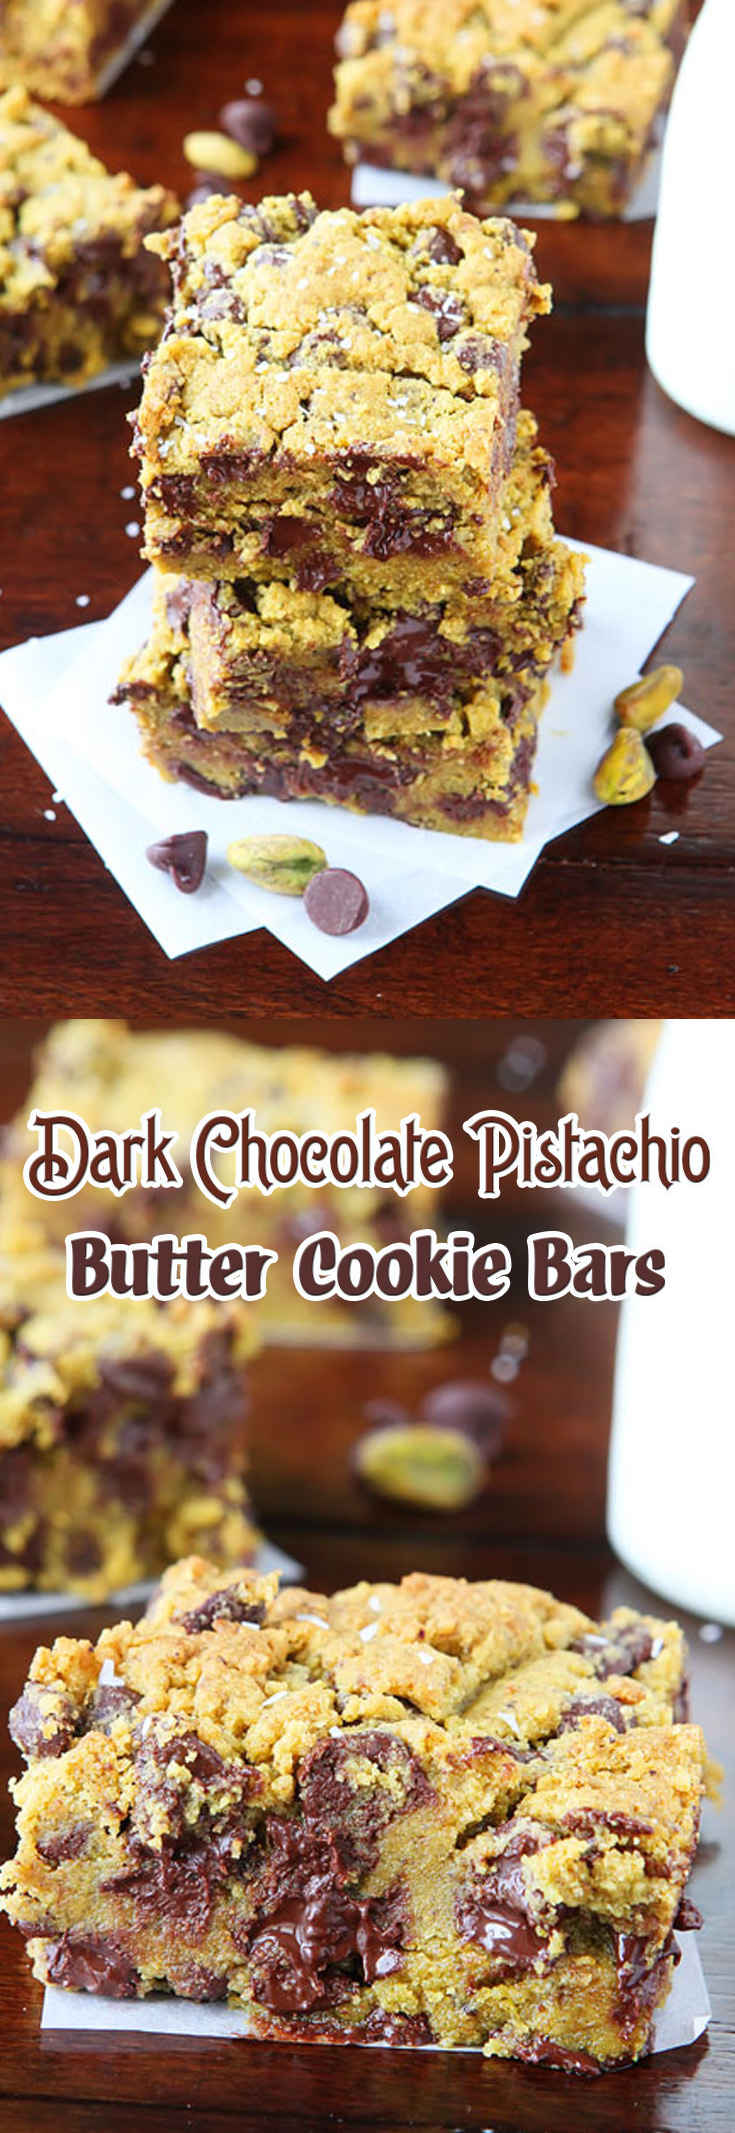 Dark Chocolate Pistachio Butter Cookie Bars